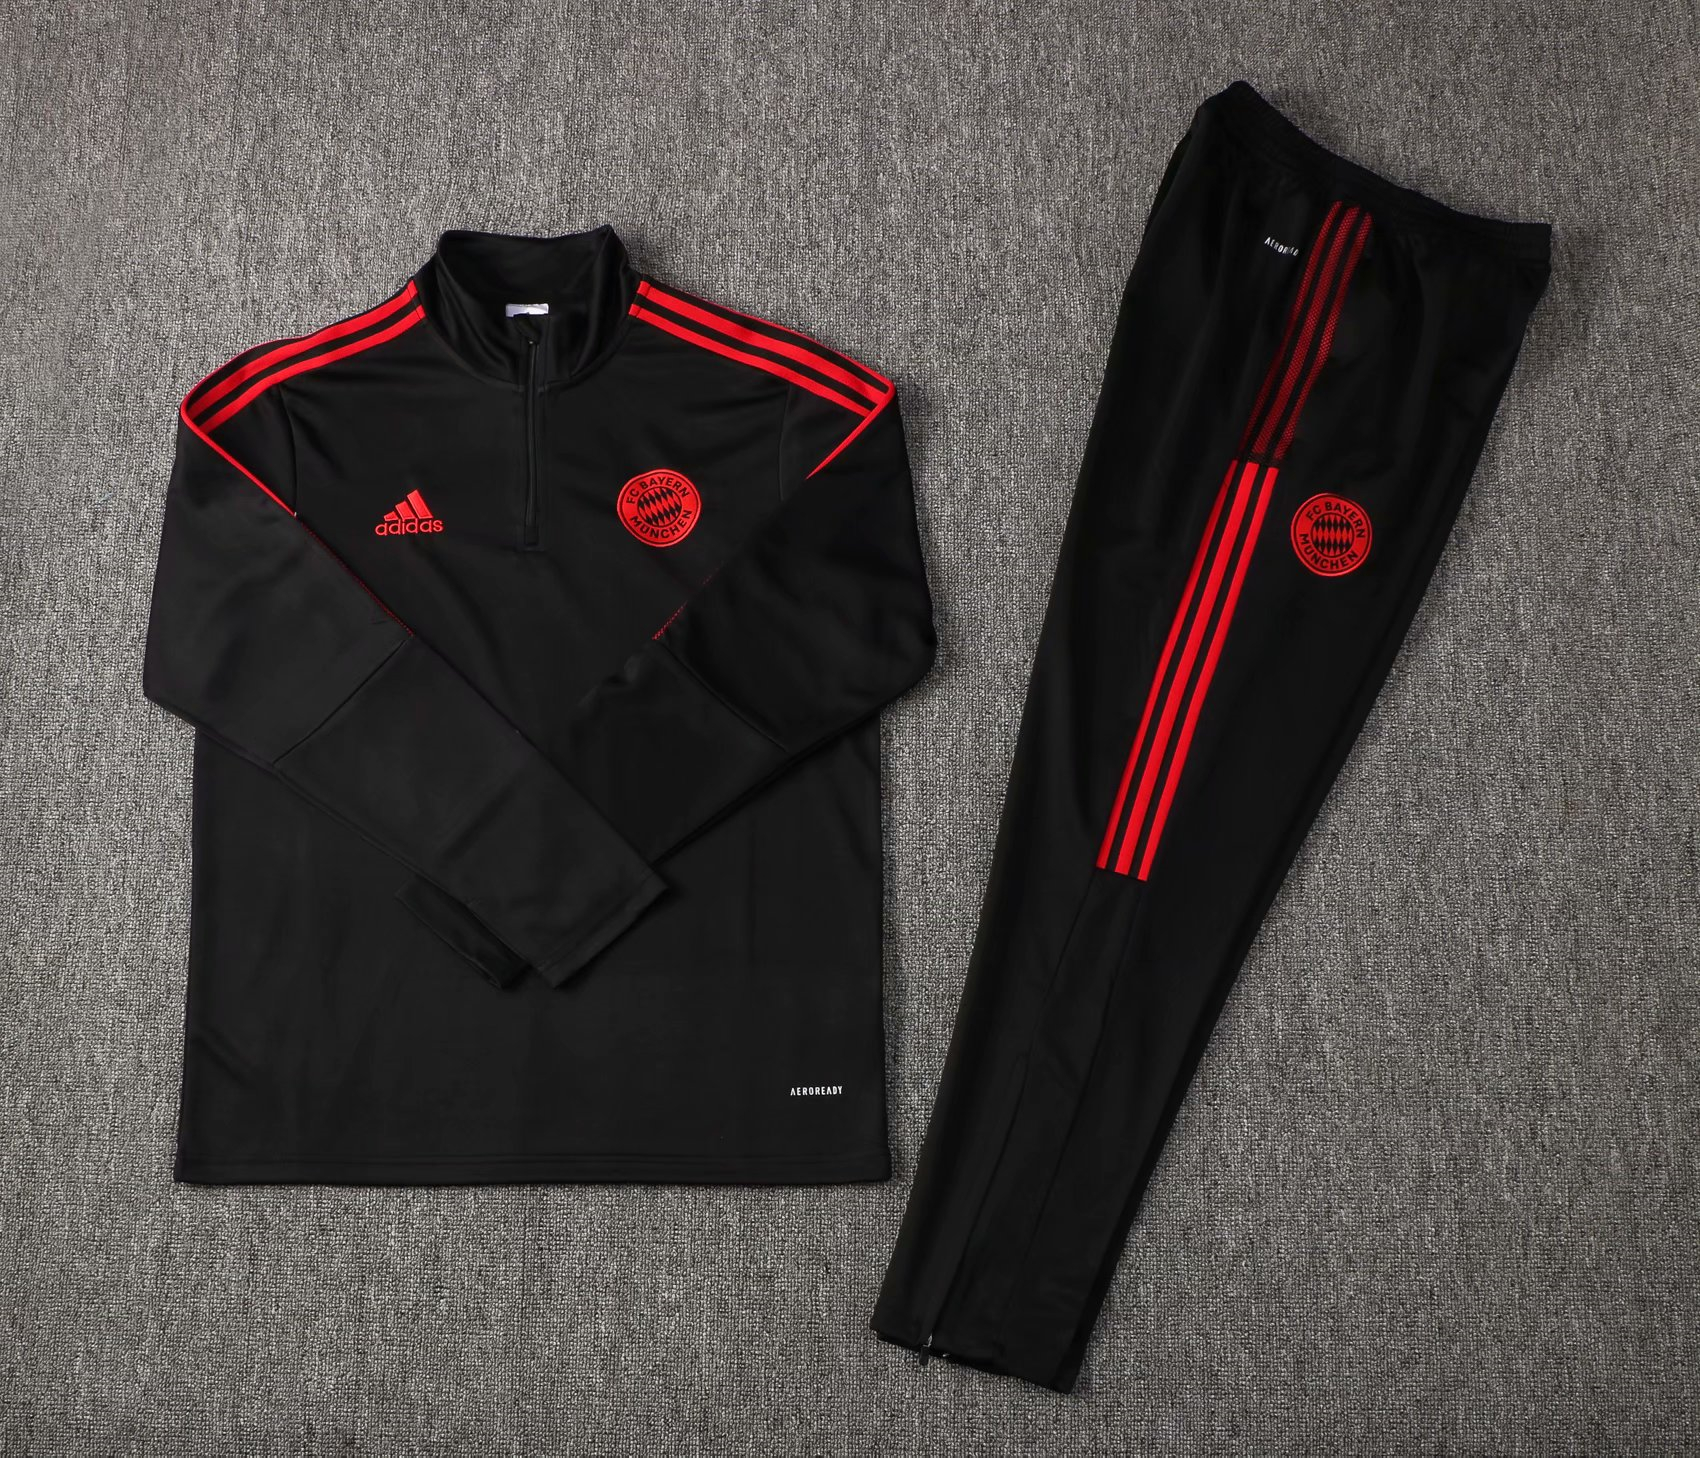 Bayern Munich 2021/22 Black Soccer Training Suit Mens